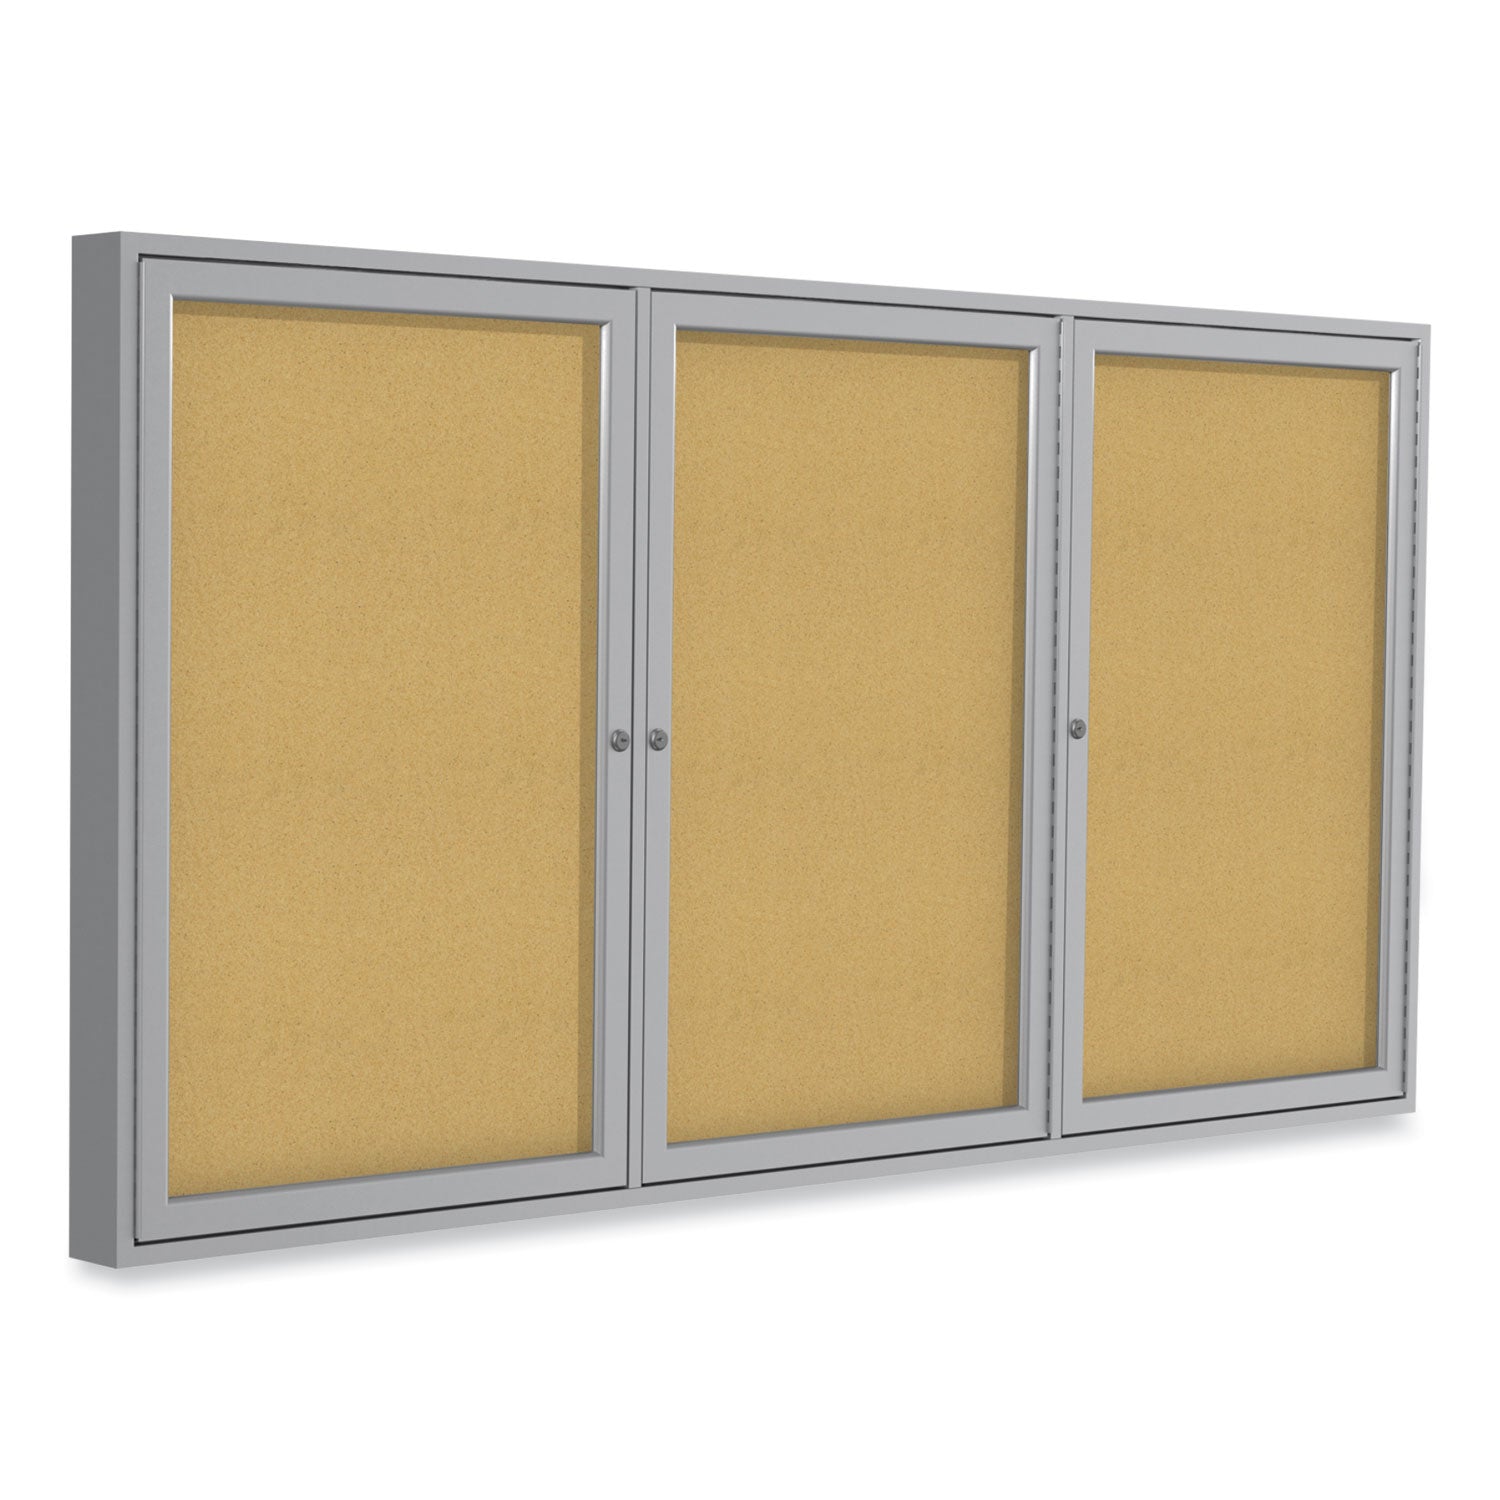 3-door-enclosed-natural-cork-bulletin-board-with-satin-aluminum-frame-72-x-48-tan-surface-ships-in-7-10-business-days_ghepa34872k - 1